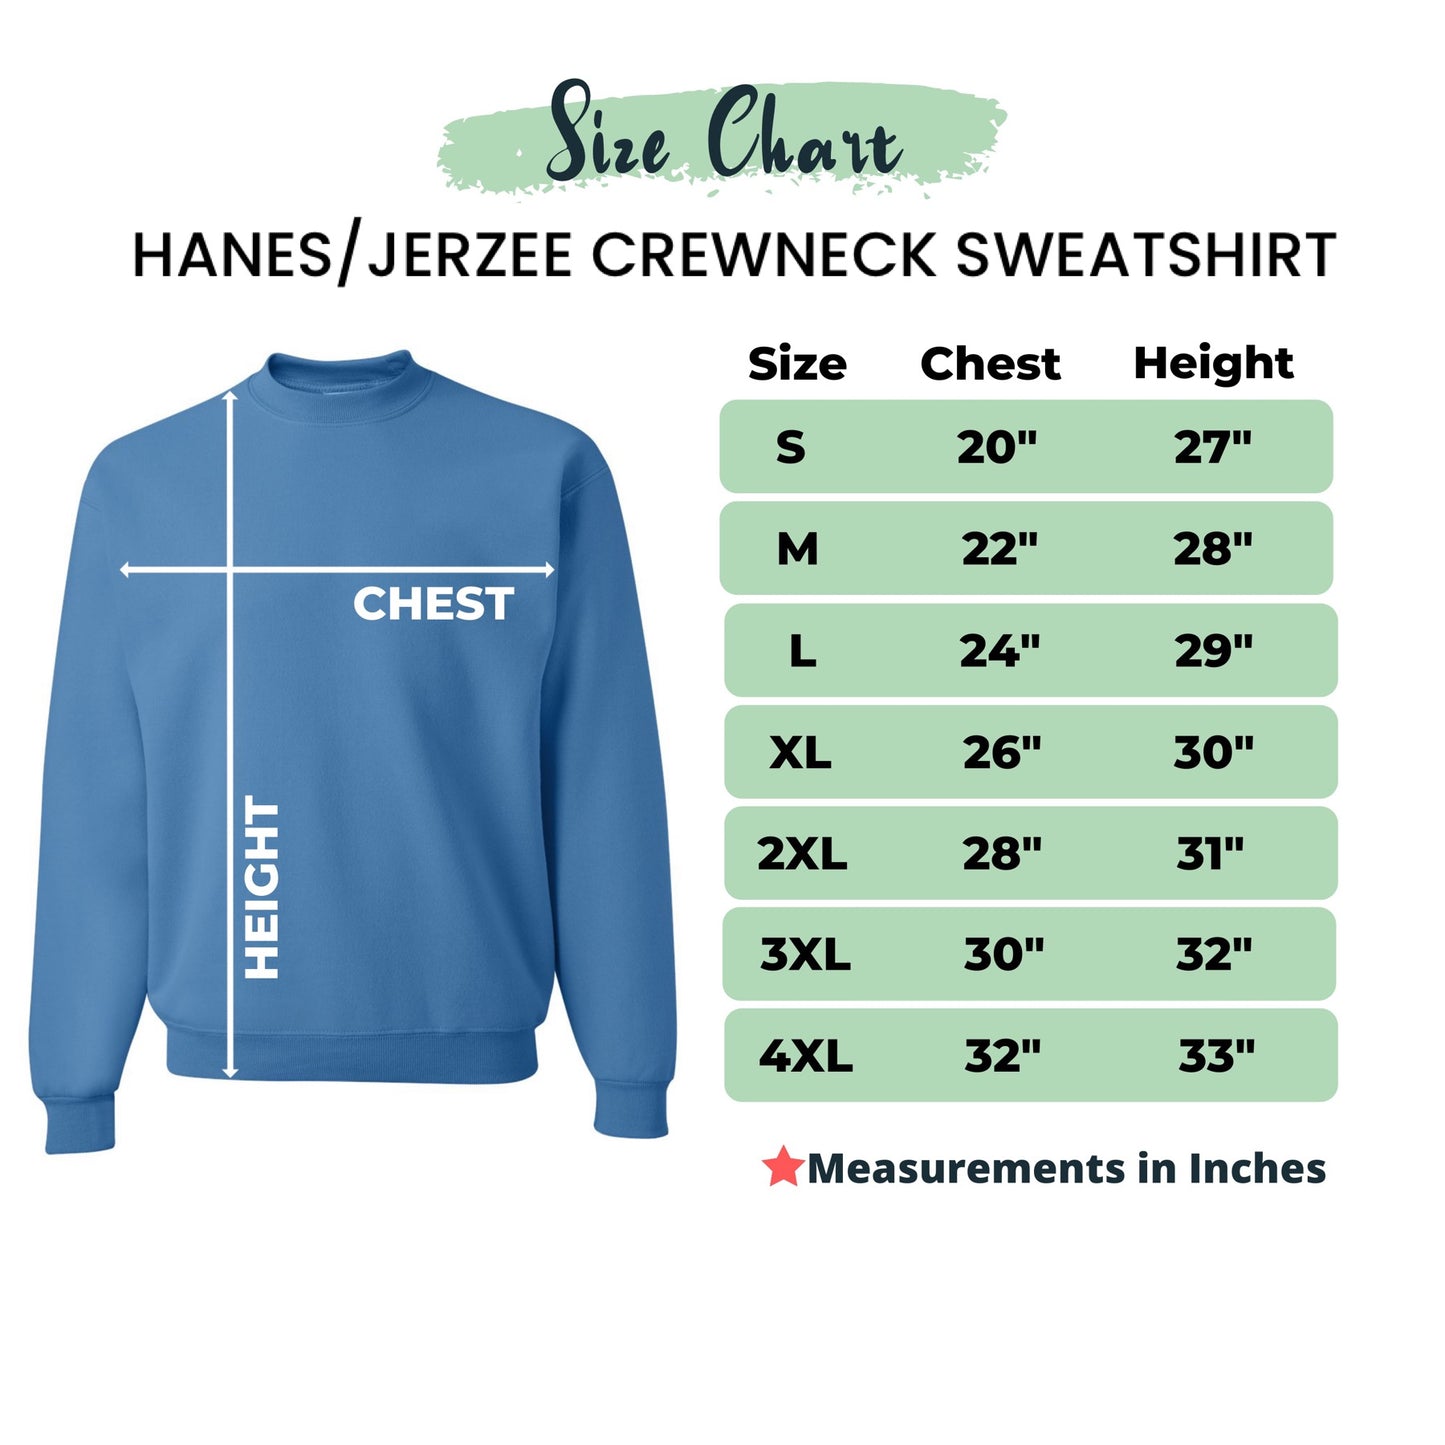 Support Your Local Farmer Crewneck Sweatshirt